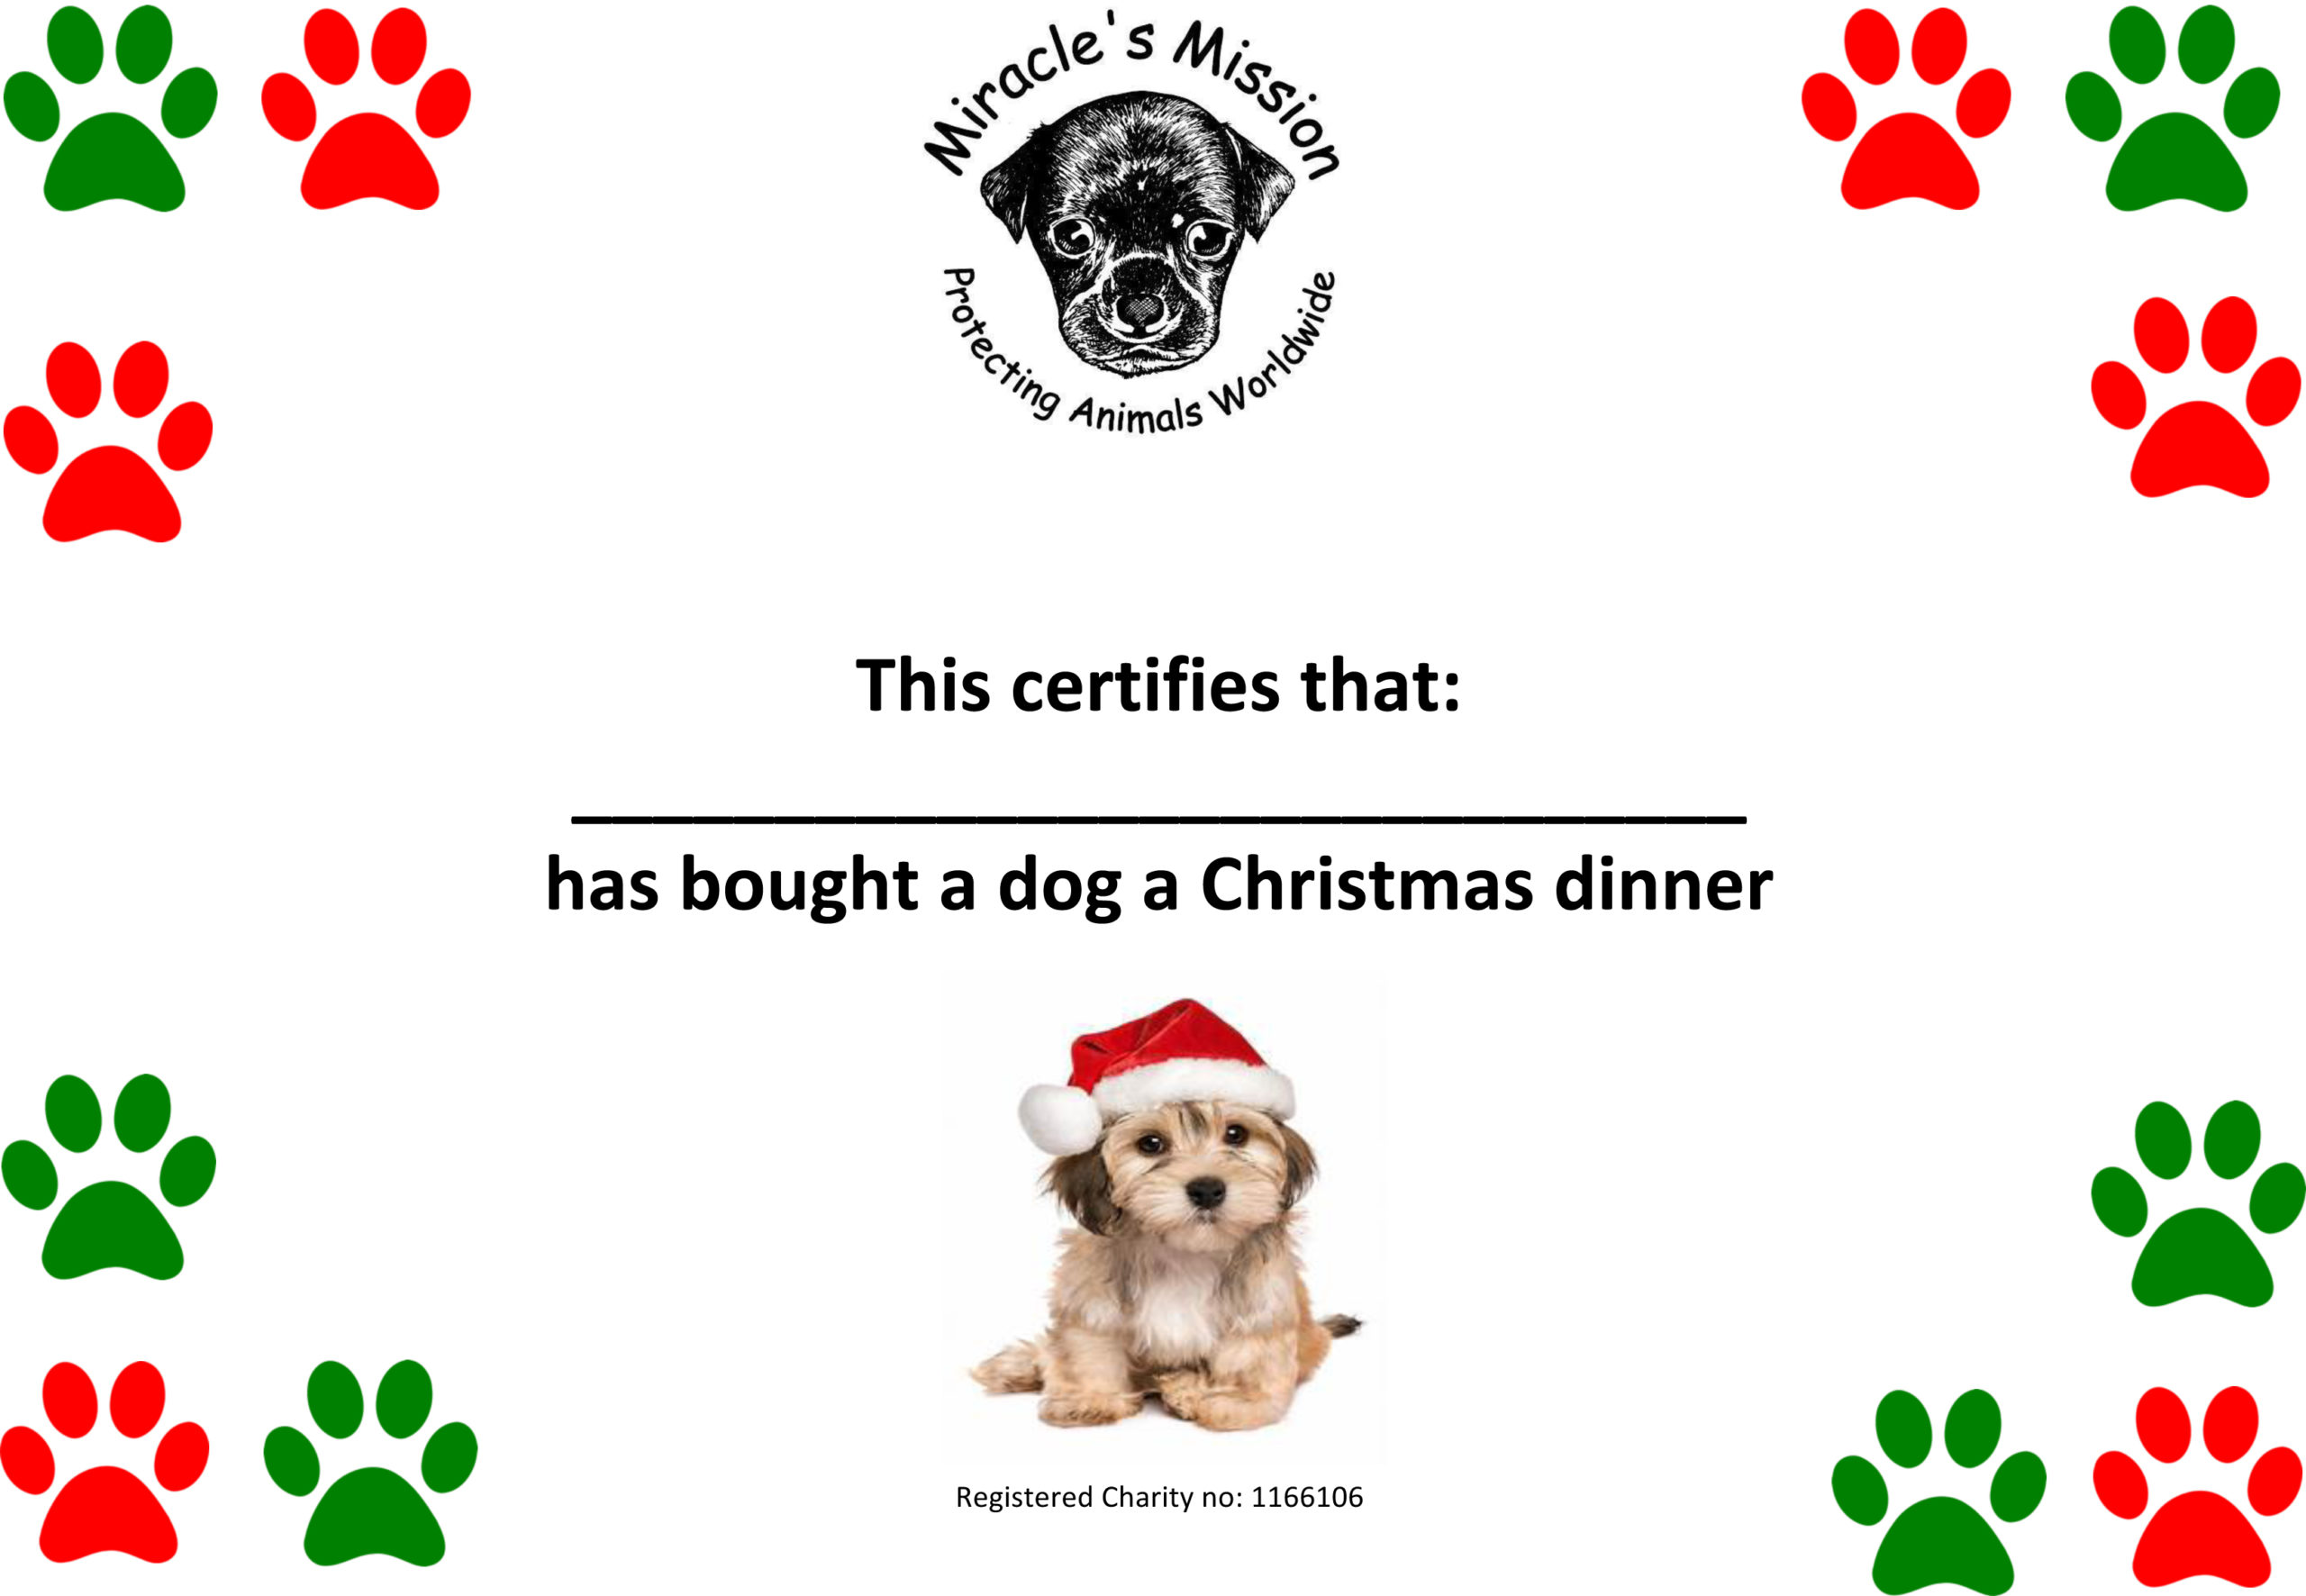 <img src="christmas.jpg" alt="christmas dinner for a dog"/> 